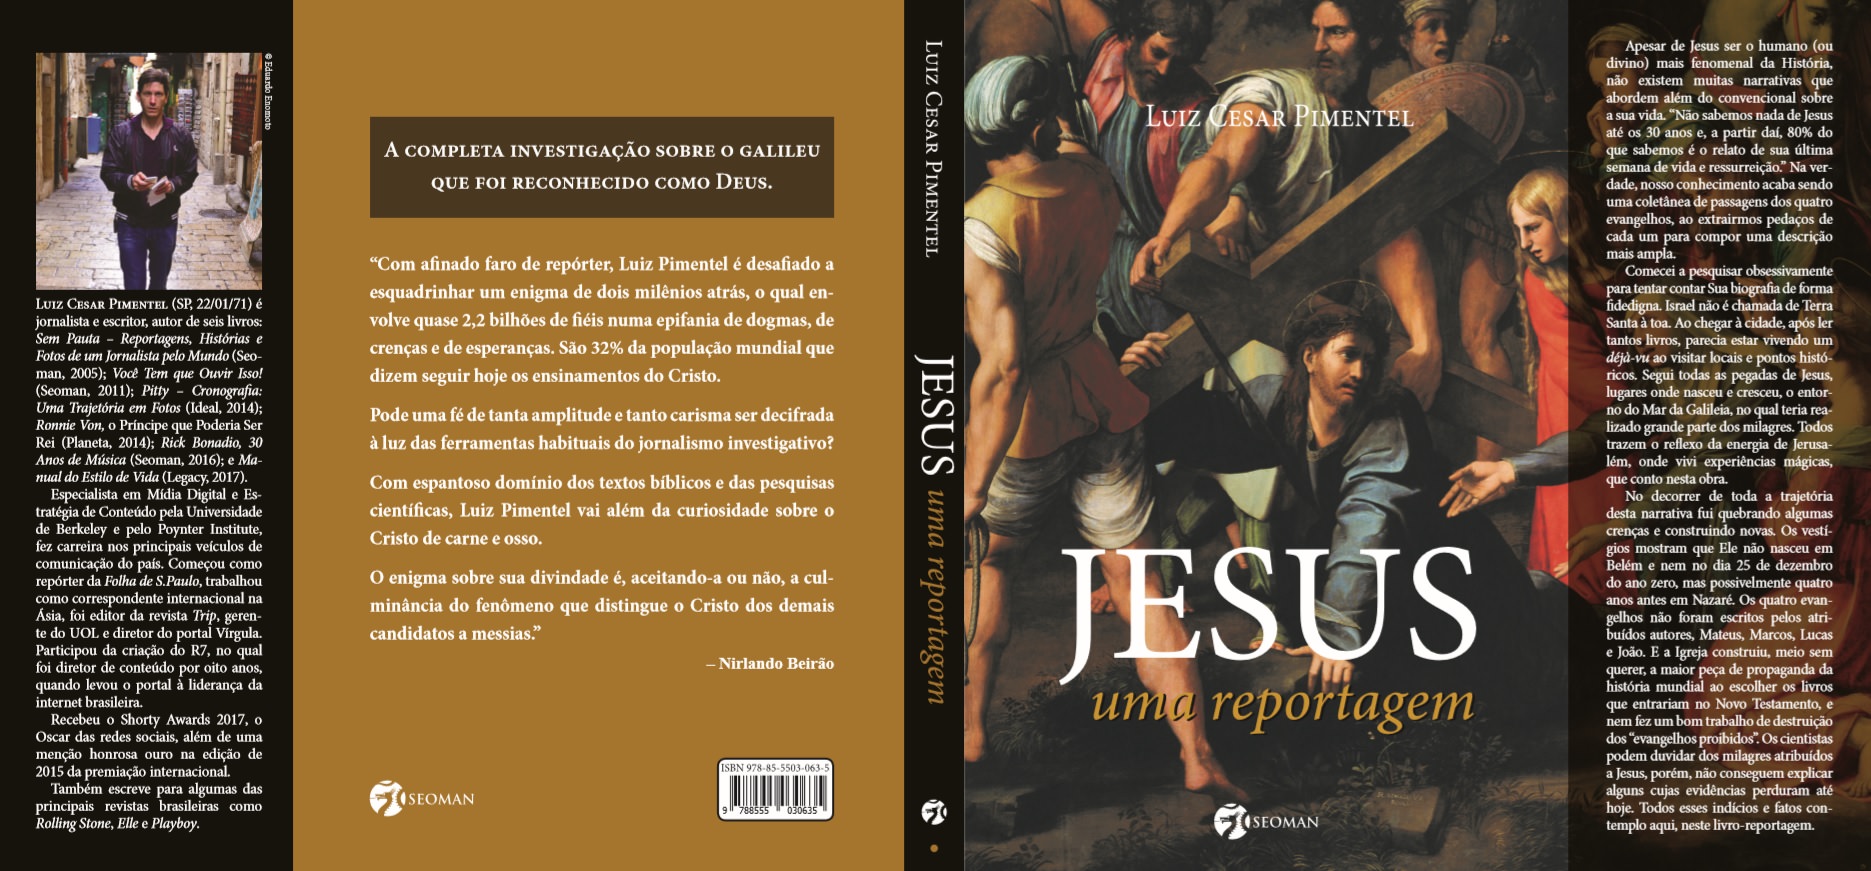 Book "Jesus, A Reportage "Luiz Cesar Pimentel, cover. Photo: MF Global Press.